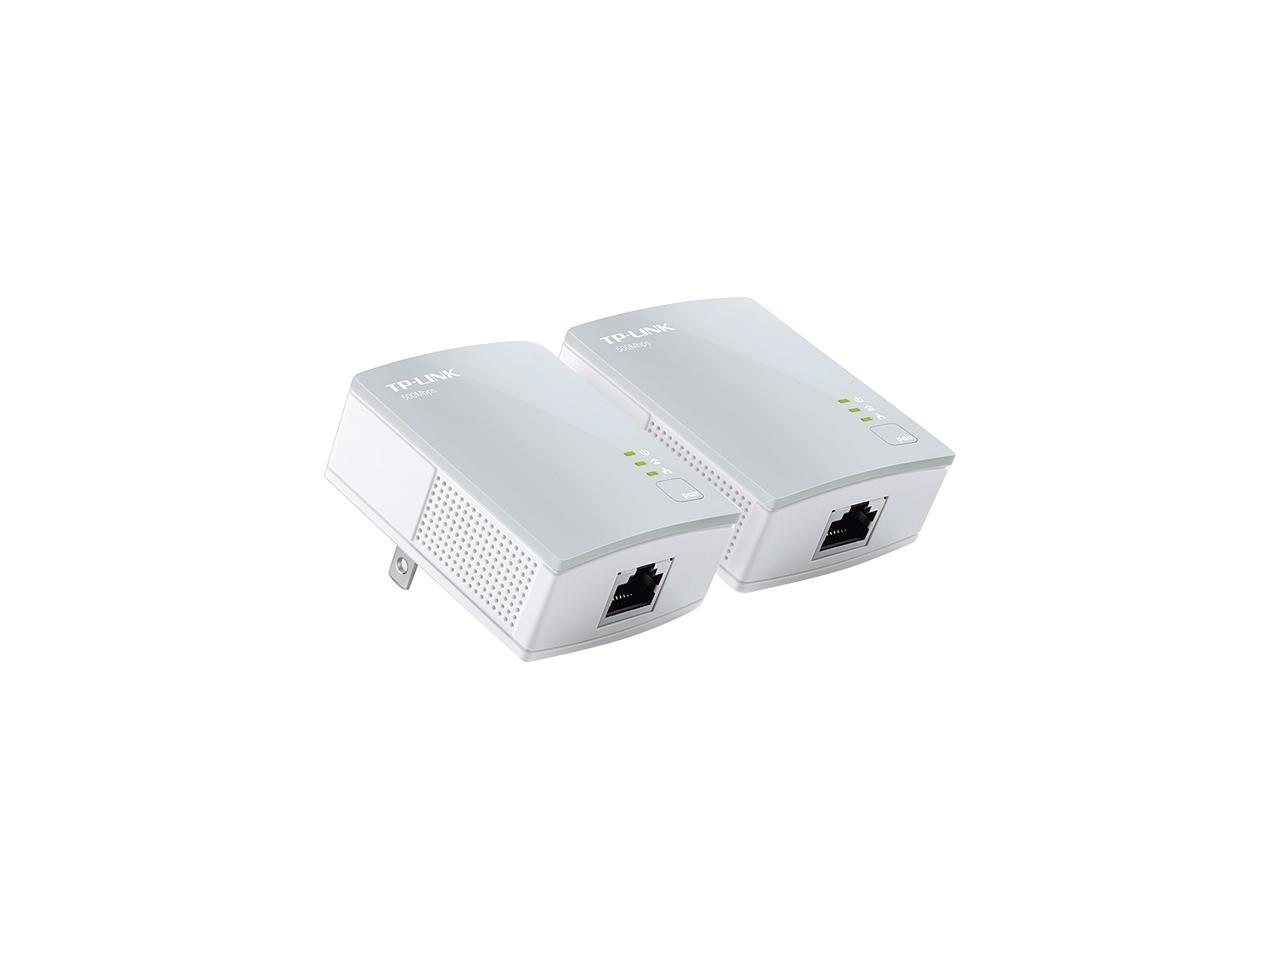 TP-Link AV600 Powerline Ethernet Adapter - Plug & Play, Power Saving, Nano Powerline Adapter (TL-PA4010 KIT)